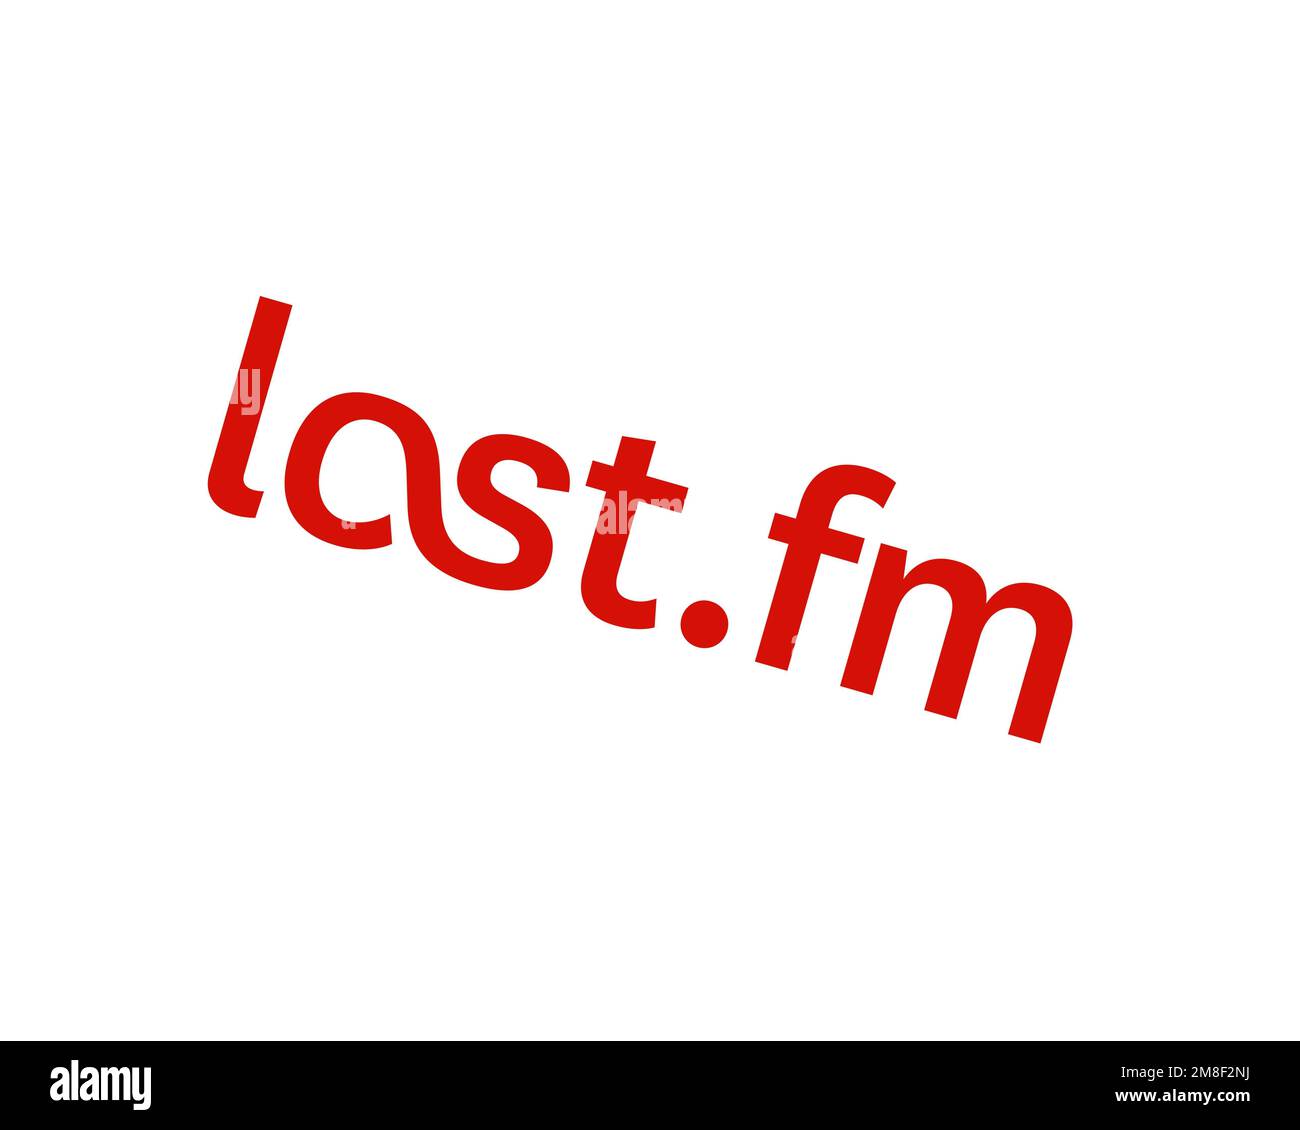 Last. fm, rotated logo, white background B Stock Photo